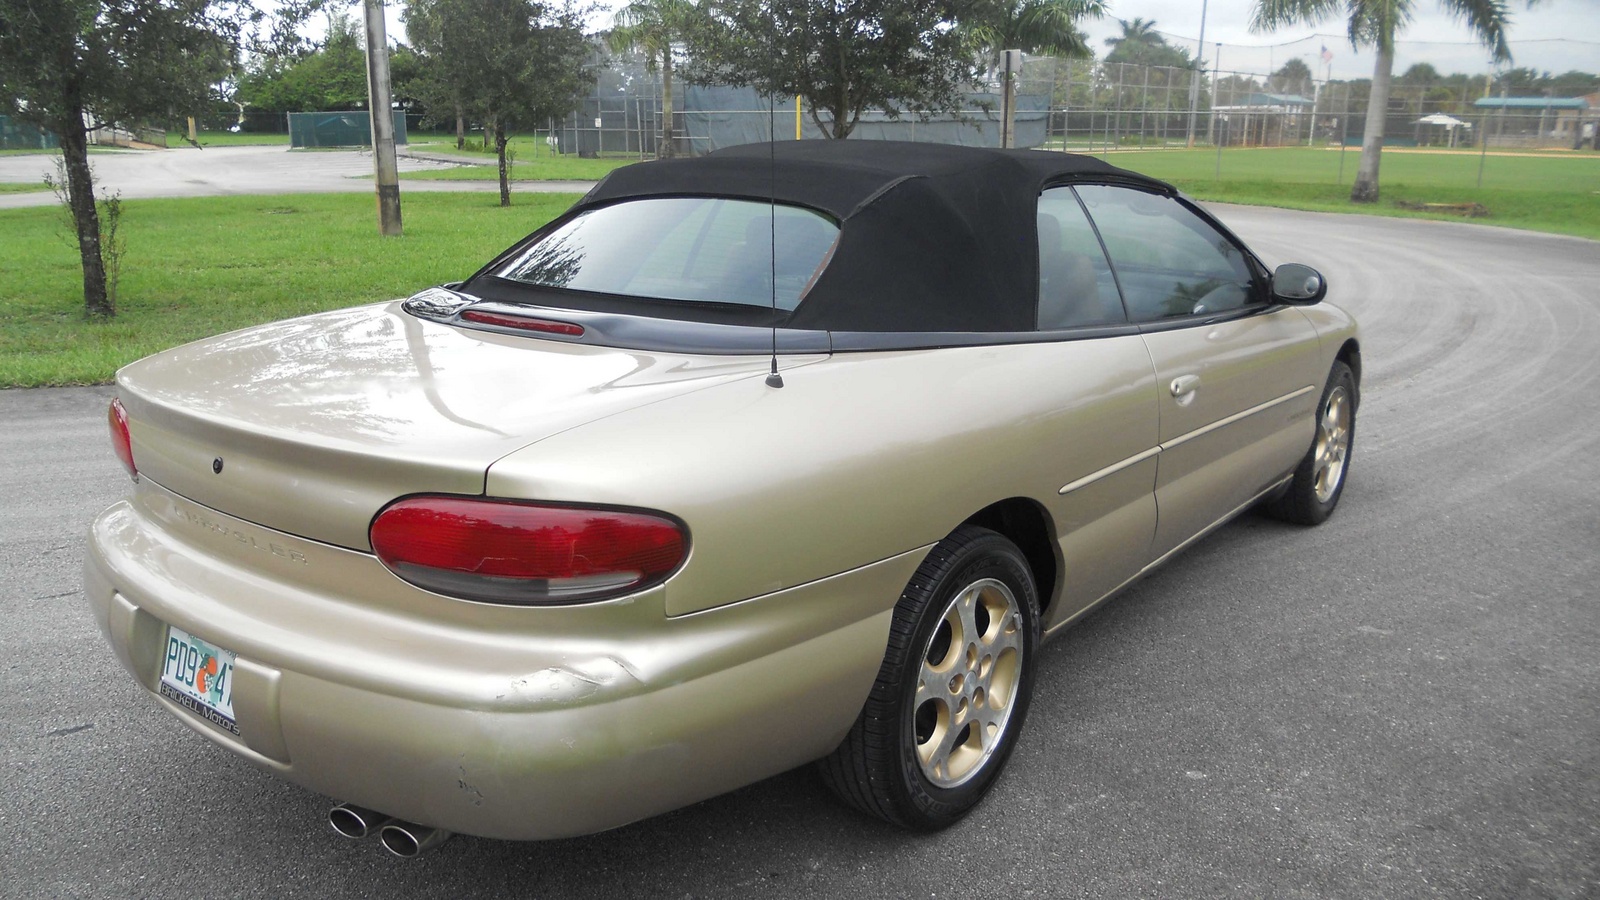 1998 Chrysler sebring convertible seat covers #1